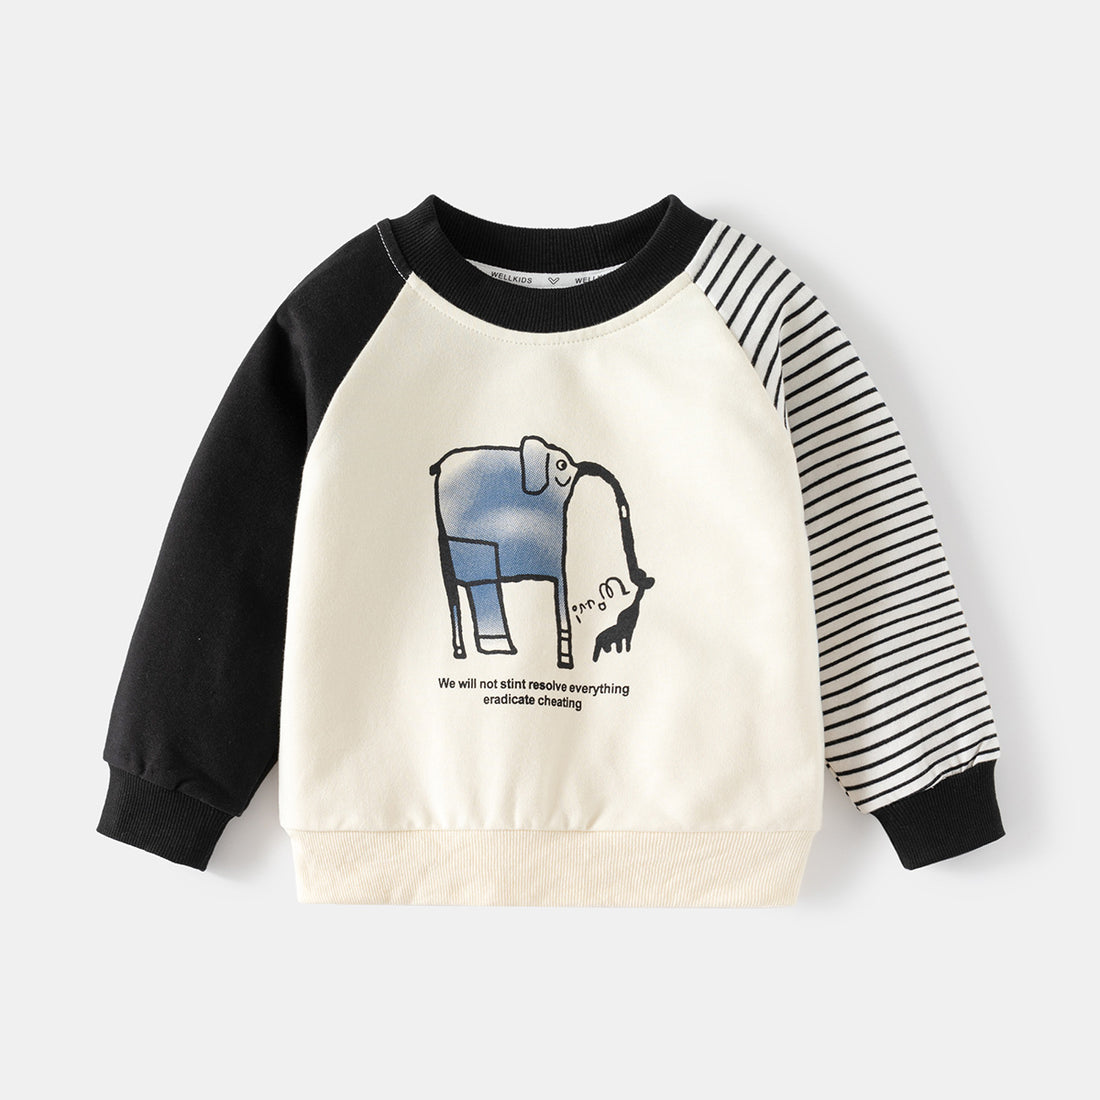 [5131097] - Baju Atasan Sweater Lengan Panjang Fashion Import Anak Cowok - Motif Striped Elephant